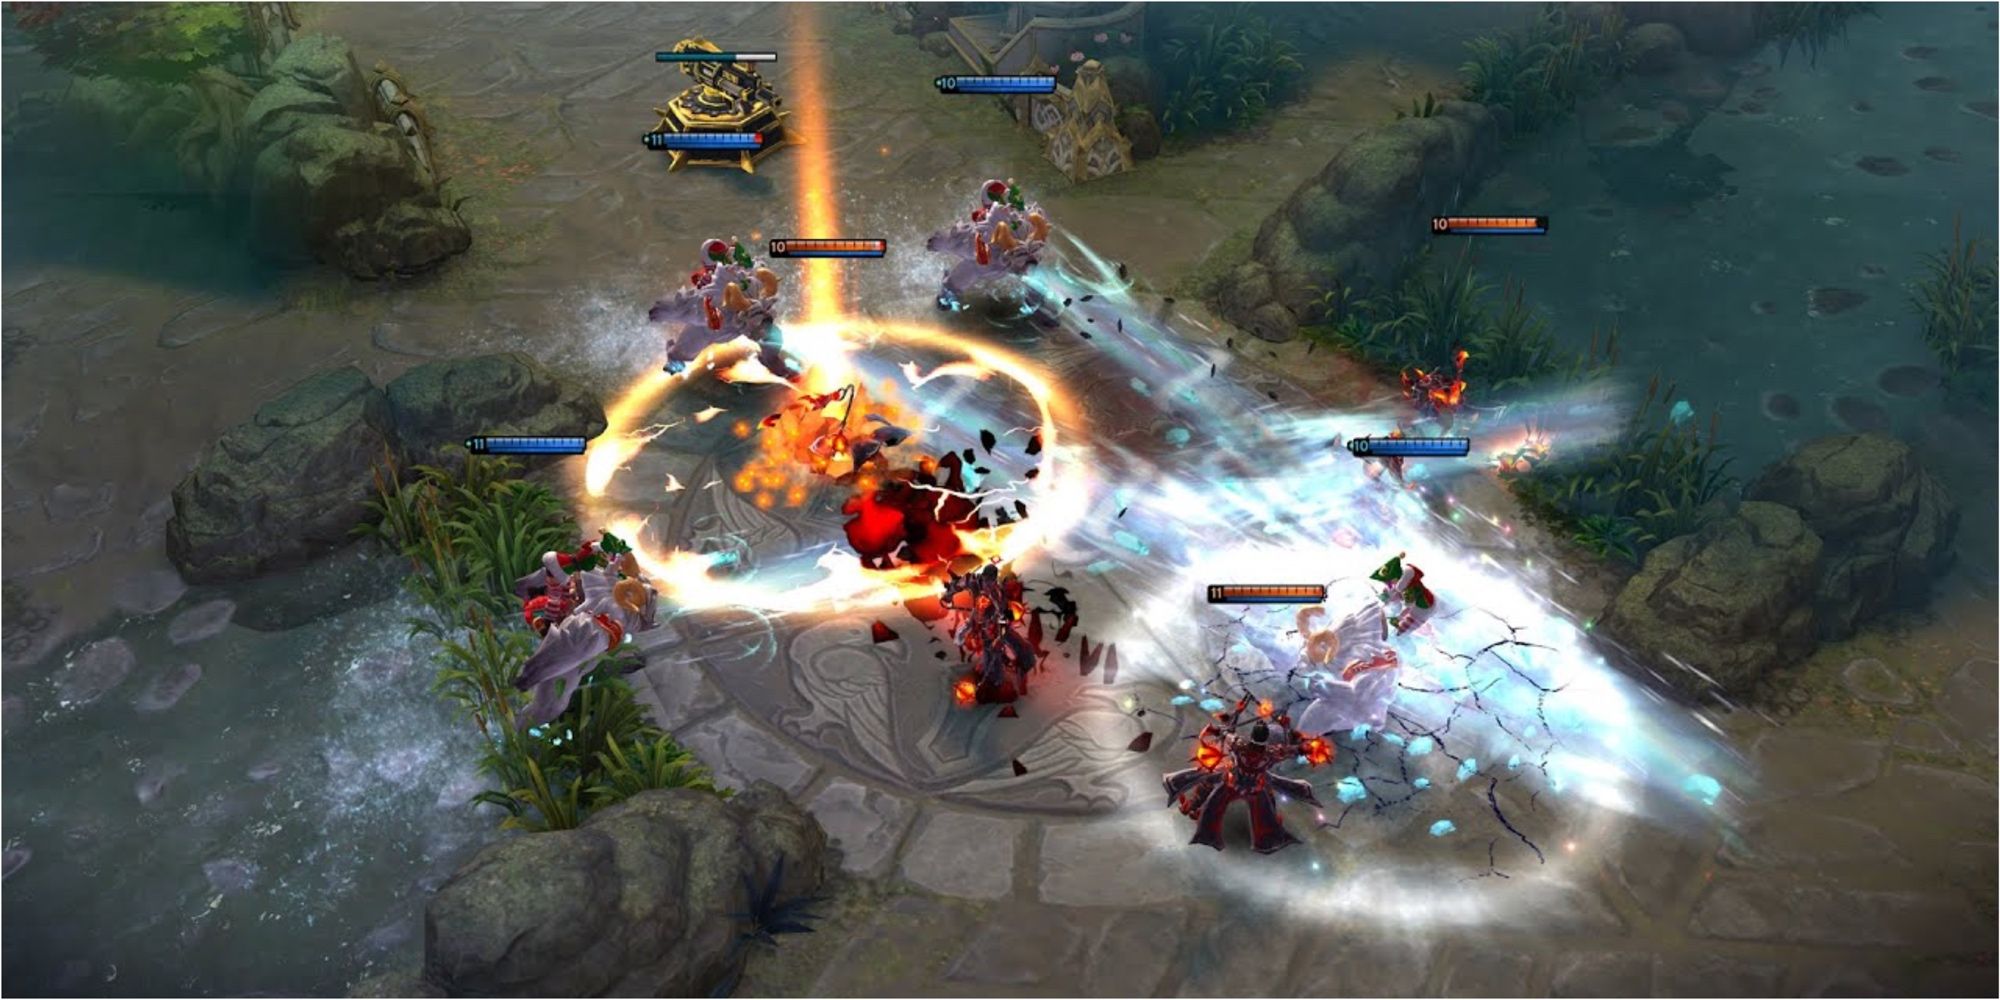 Vainglory gameplay screenshot of a chaotic battle.